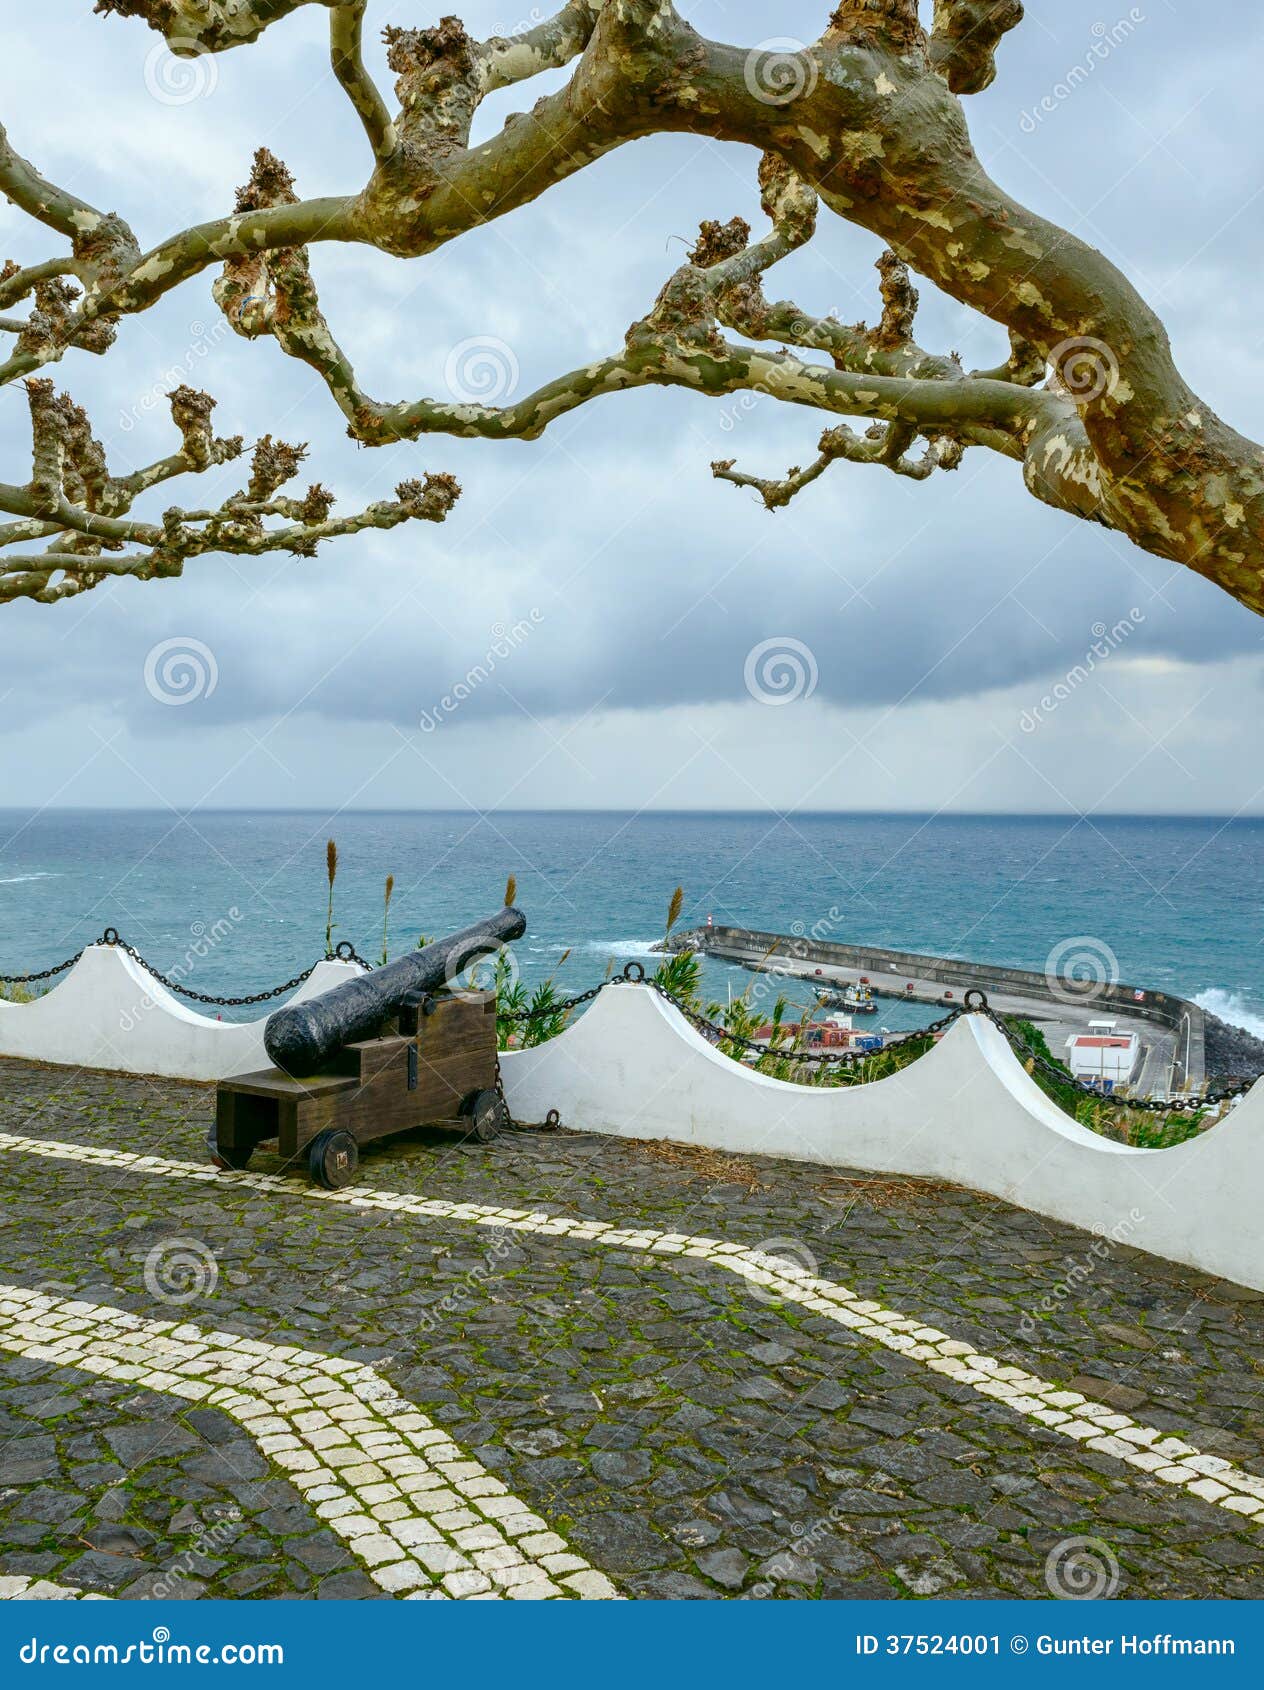 cannons in lajes das flores, azores archipelago (portugal)